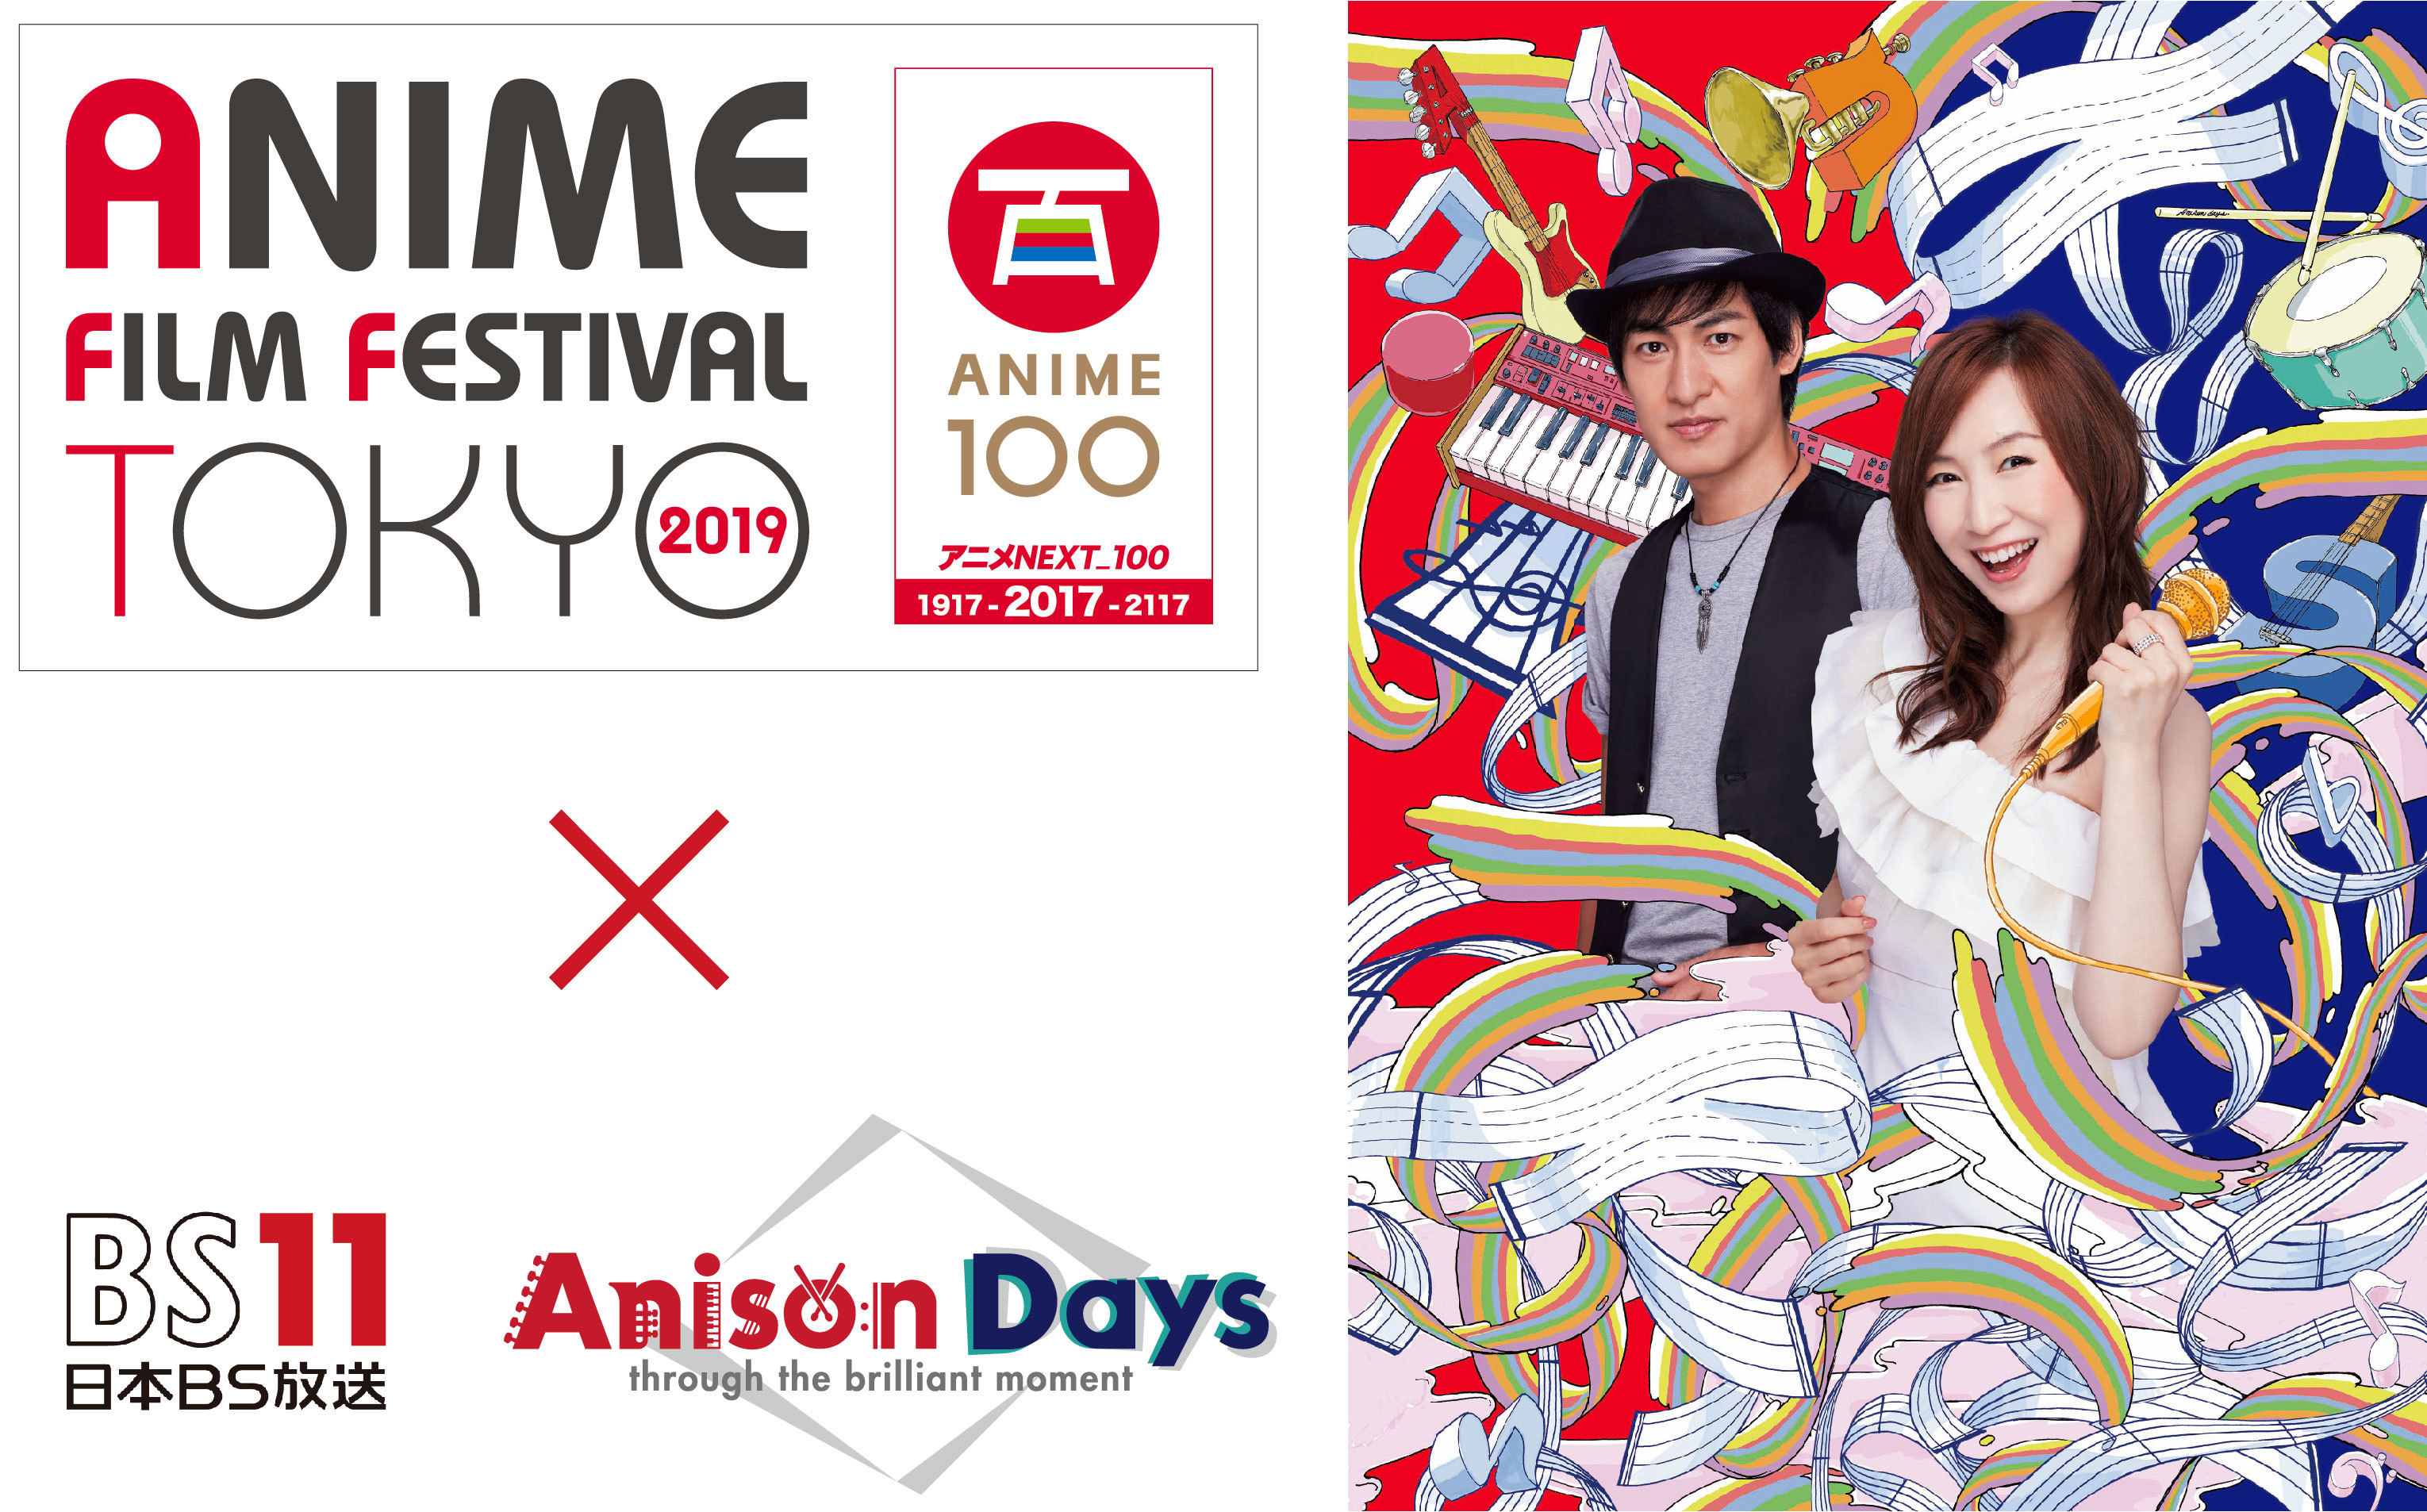 『Anison Days Festival ～アニメフィルムフェスティバル東京2019×Anison Days～』